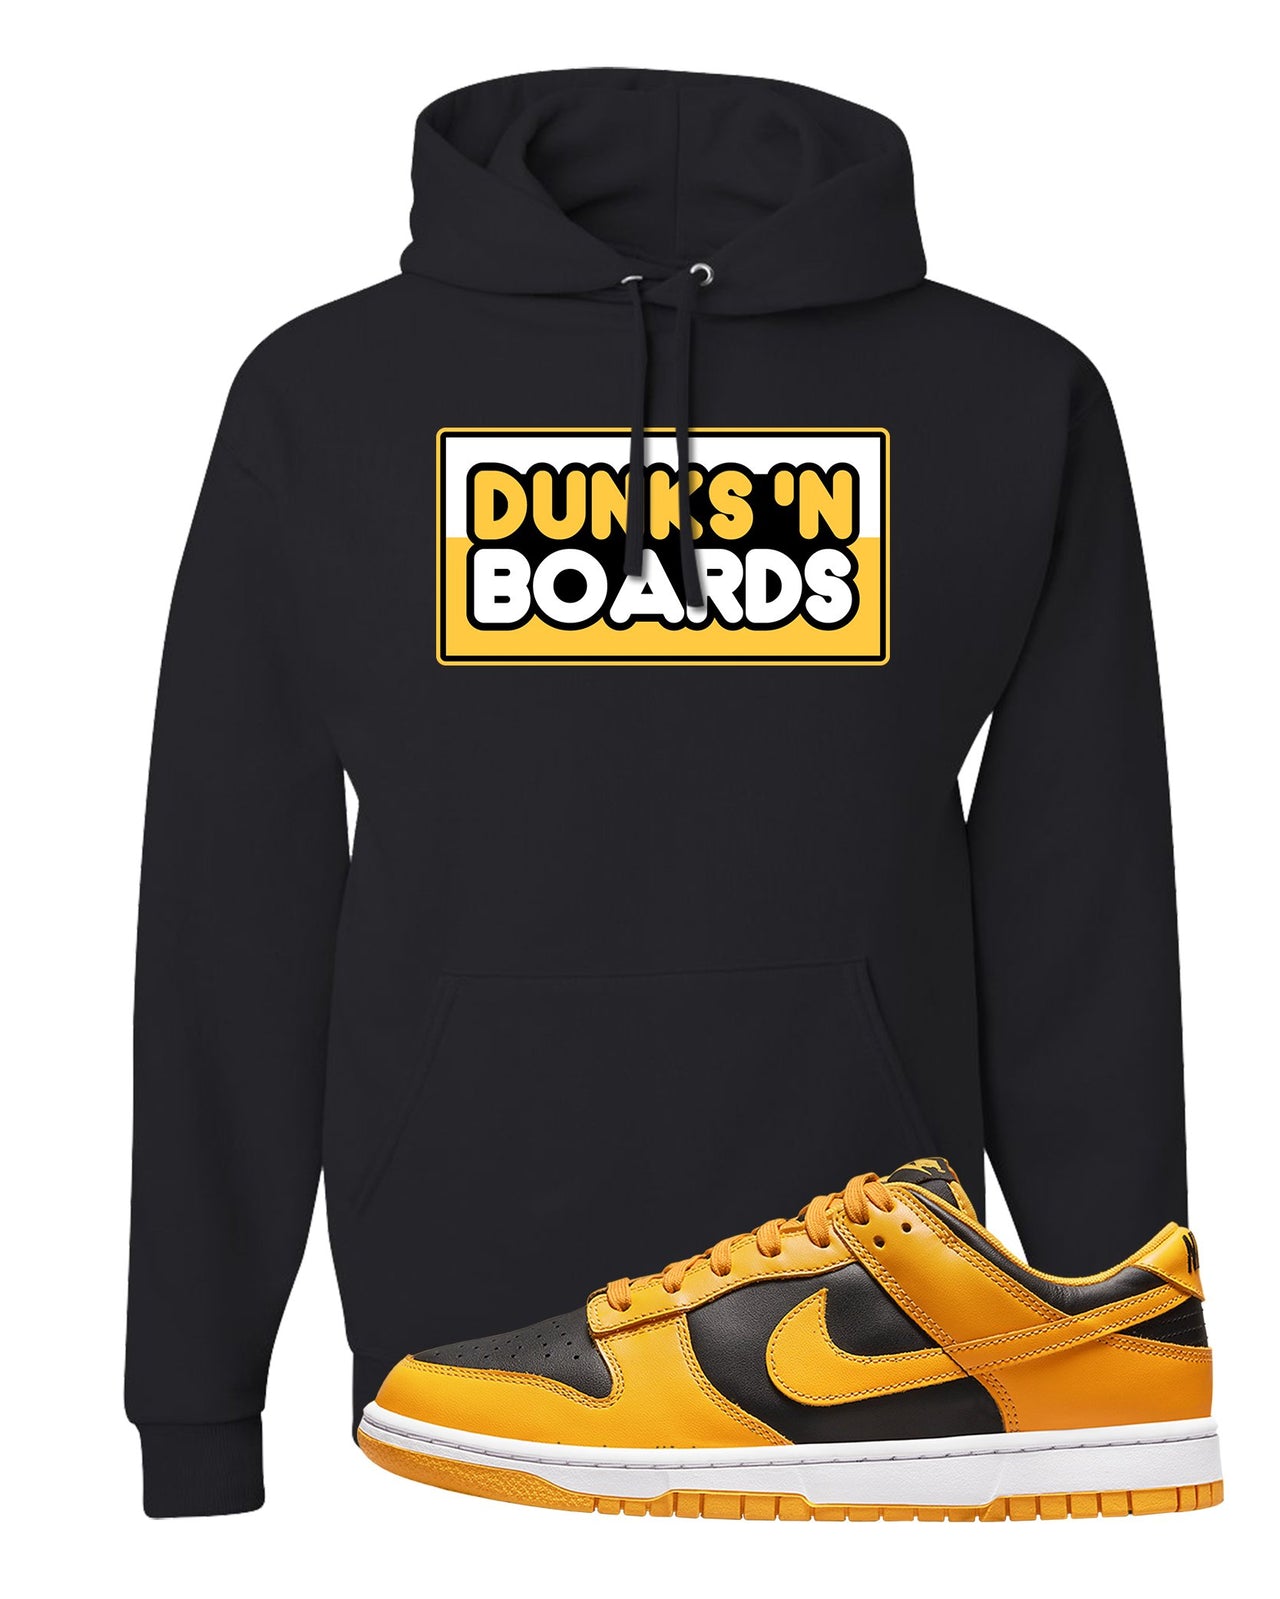 Goldenrod Low Dunks Hoodie | Dunks N Boards, Black